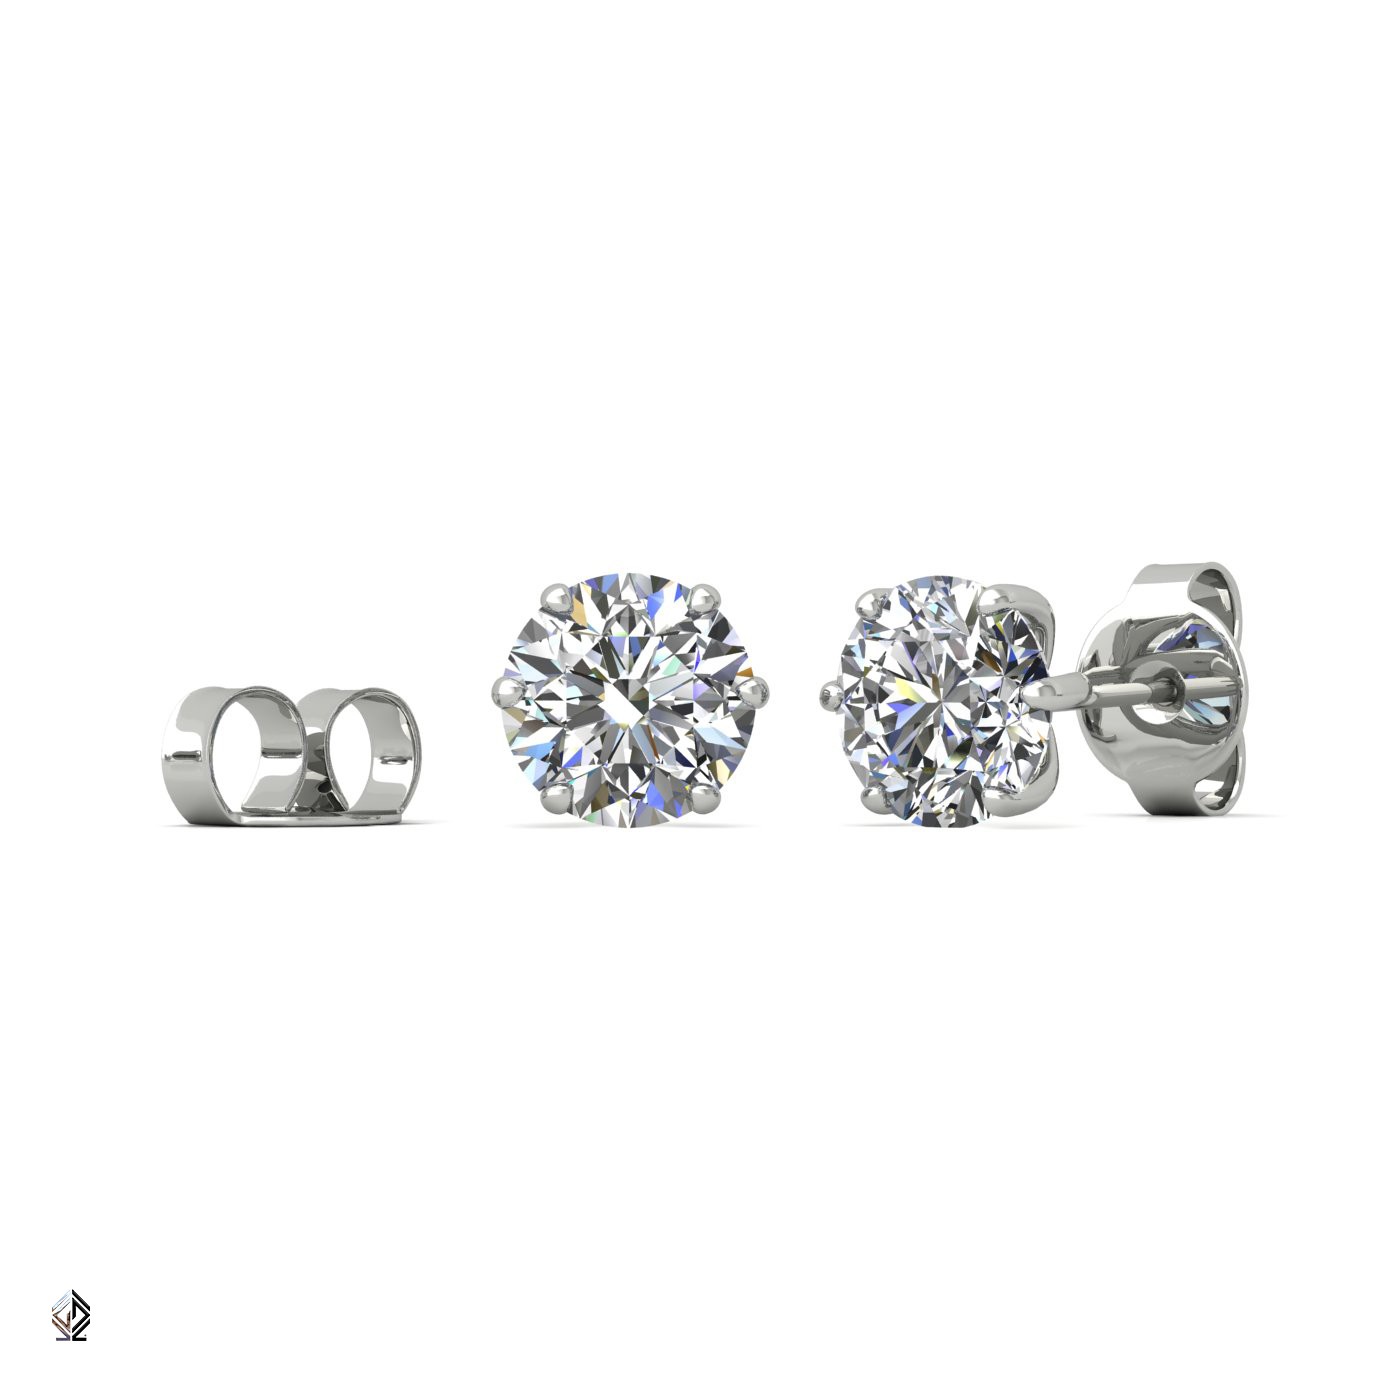 18k white gold 0,5 ct each (1,0 tcw) 6 prongs round shape diamond earrings